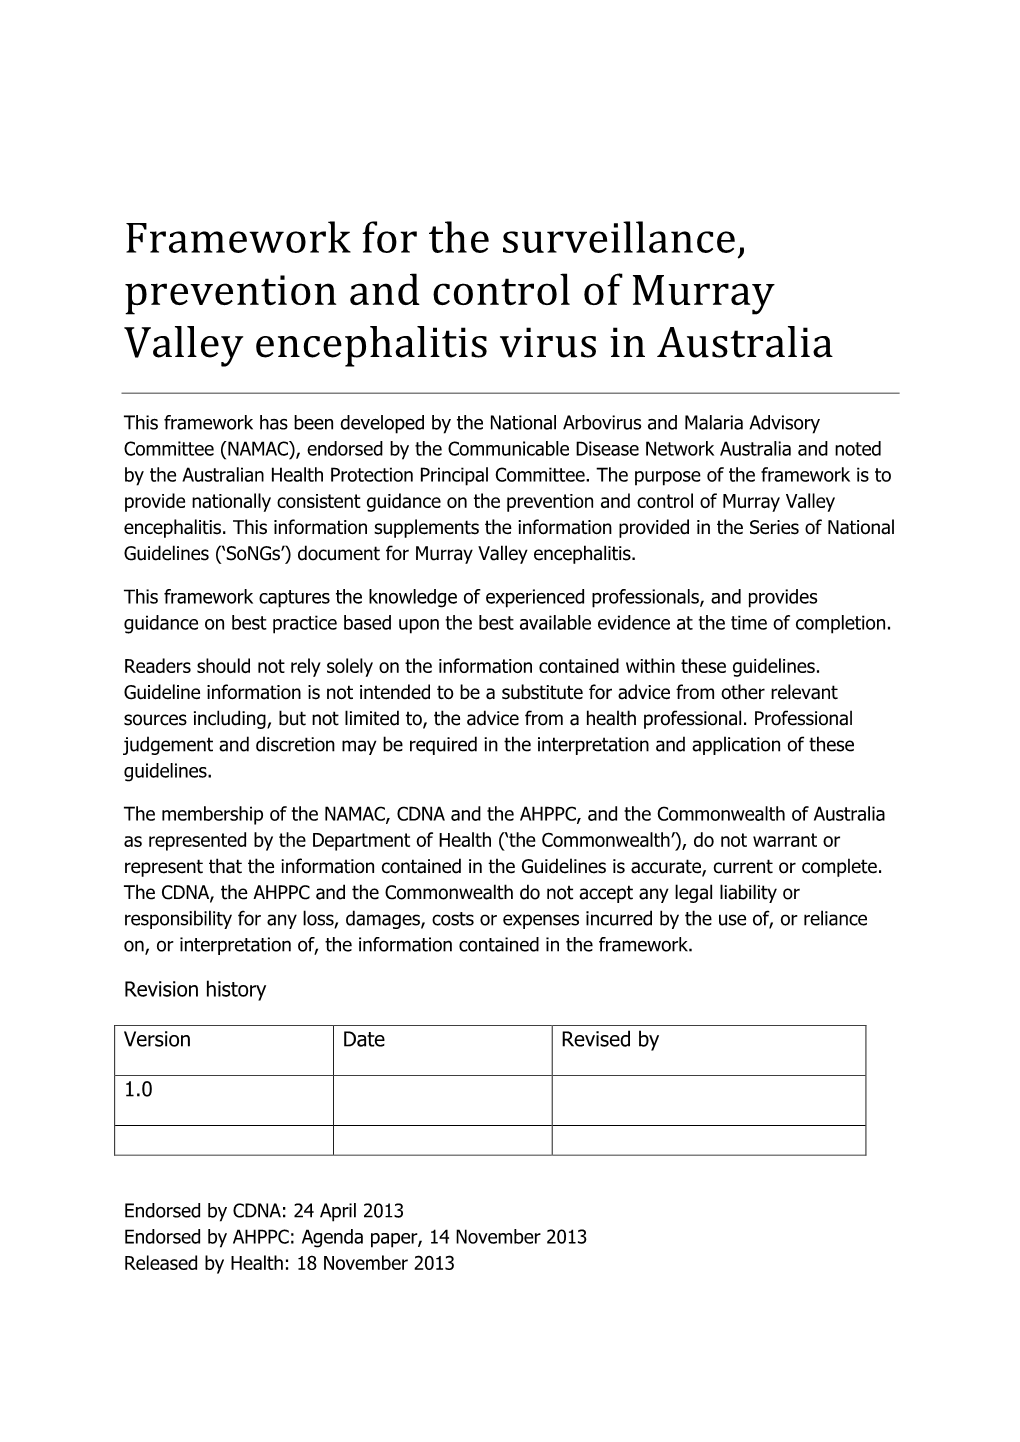 Framework for the Surveillance, Prevention and Control of Murray Valley Encephalitis Virus in Australia